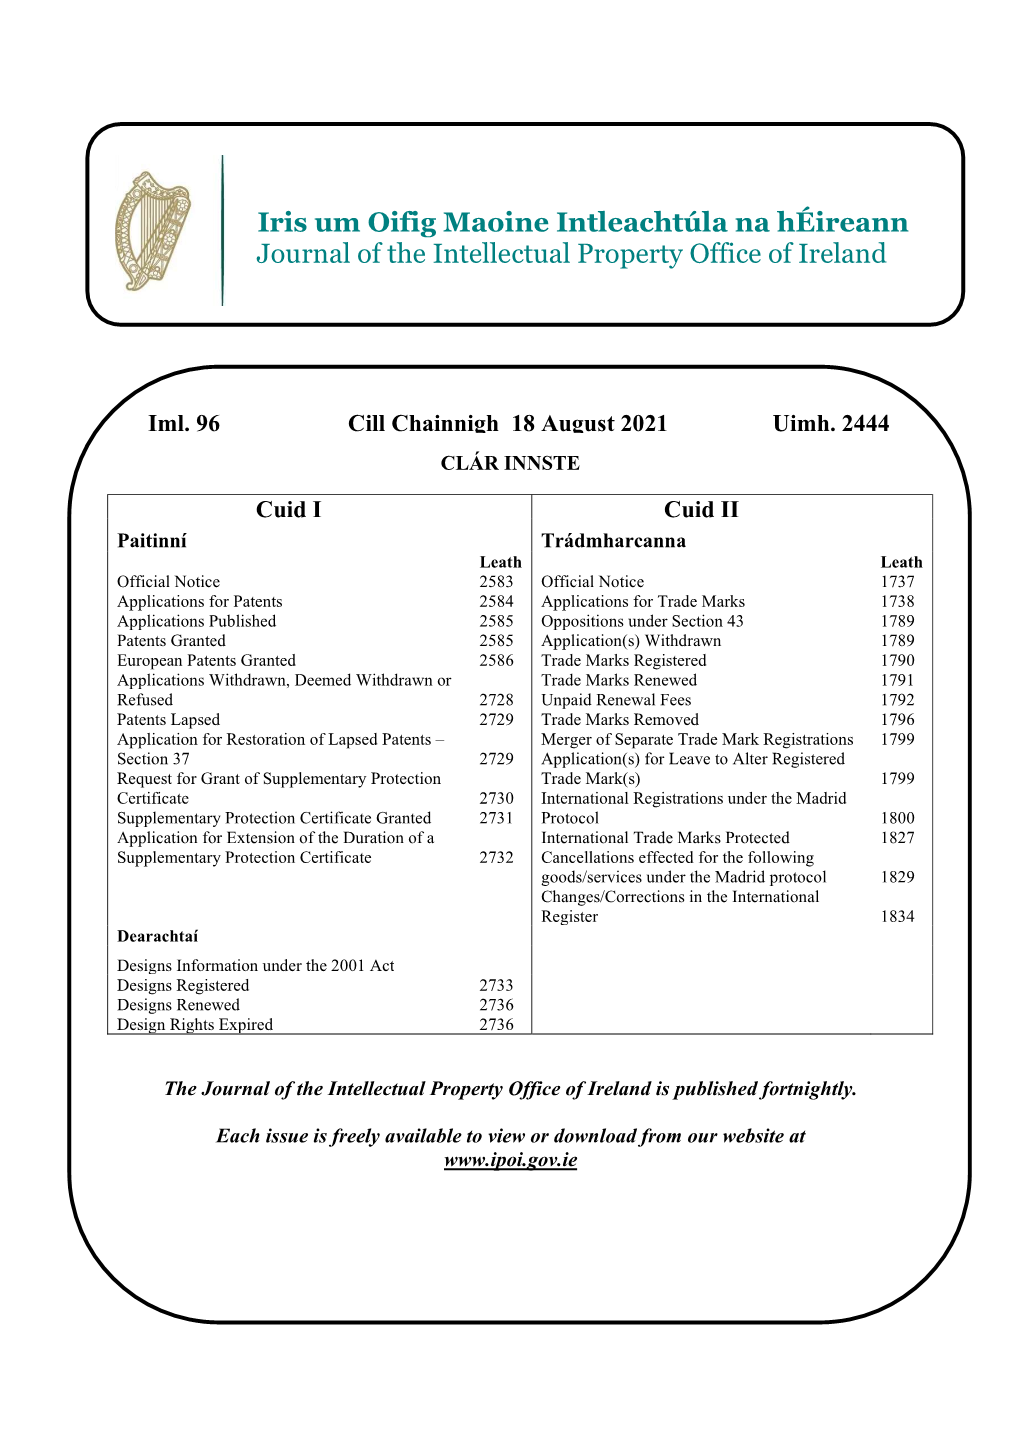 Iris Um Oifig Maoine Intleachtúla Na Héireann Journal of the Intellectual Property Office of Ireland